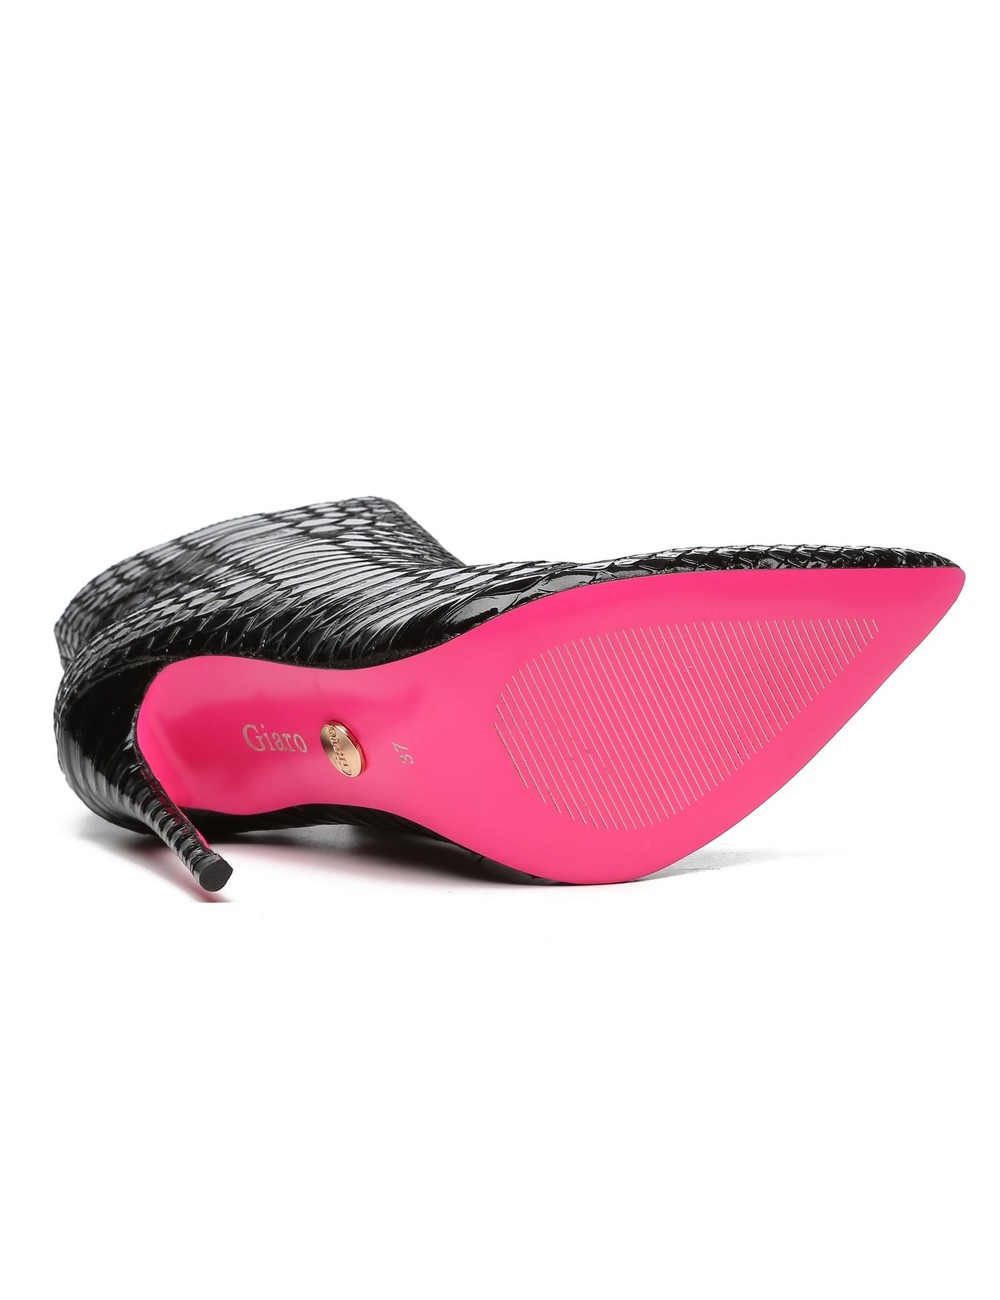 Giaro TALIA BLACK SNAKE ANKLE BOOTS - Shoebidoo Shoes | Giaro high heels